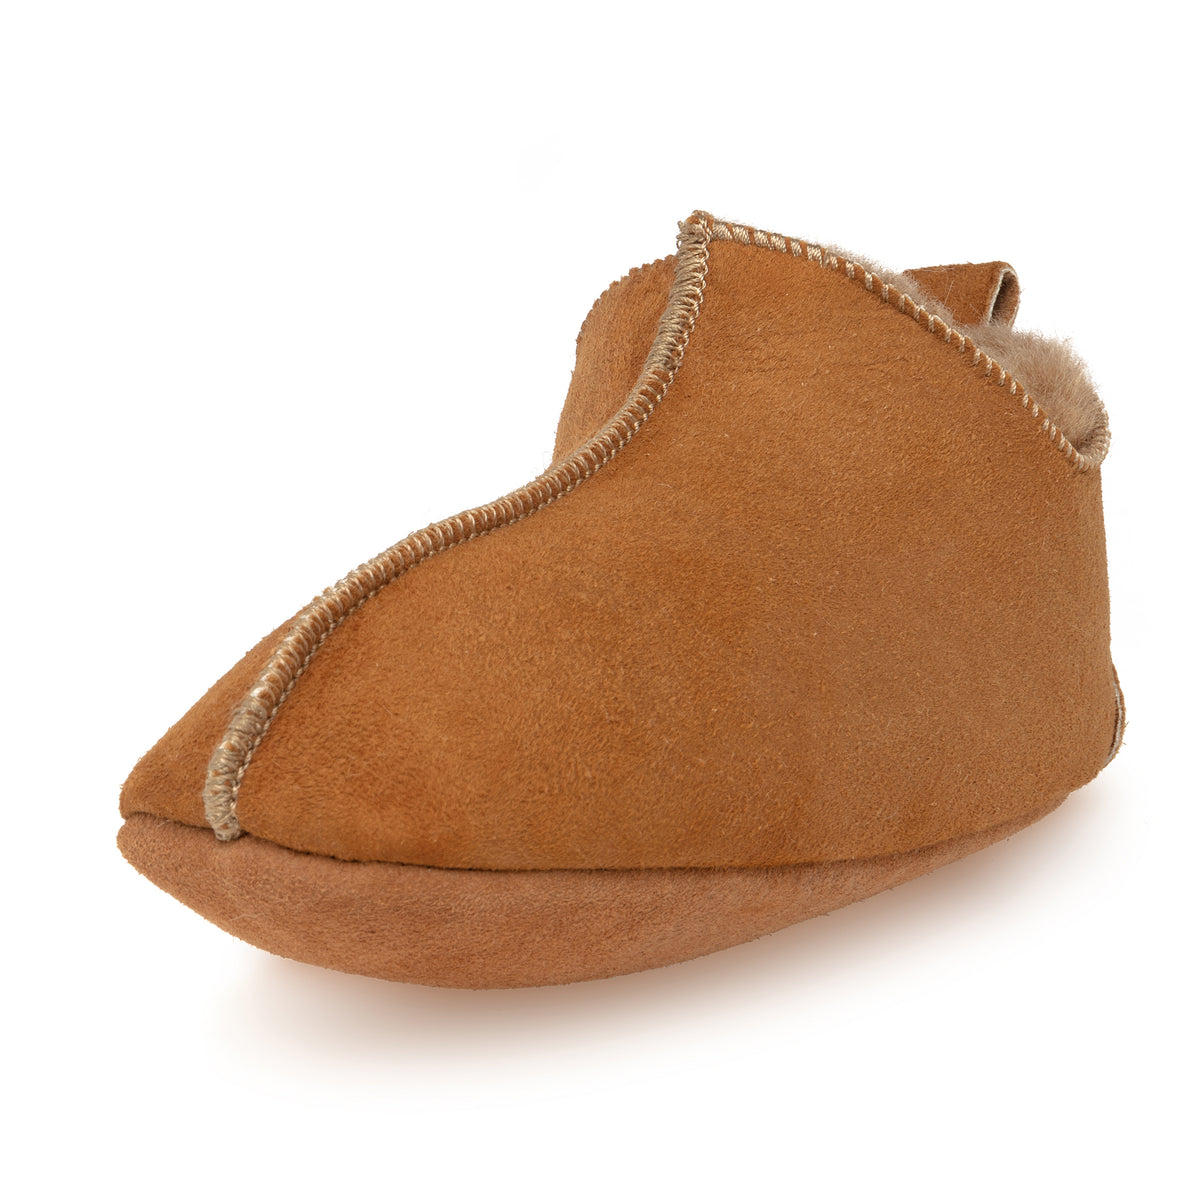 Berit Sheepskin Slippers/Yoga Shoe - Chestnut